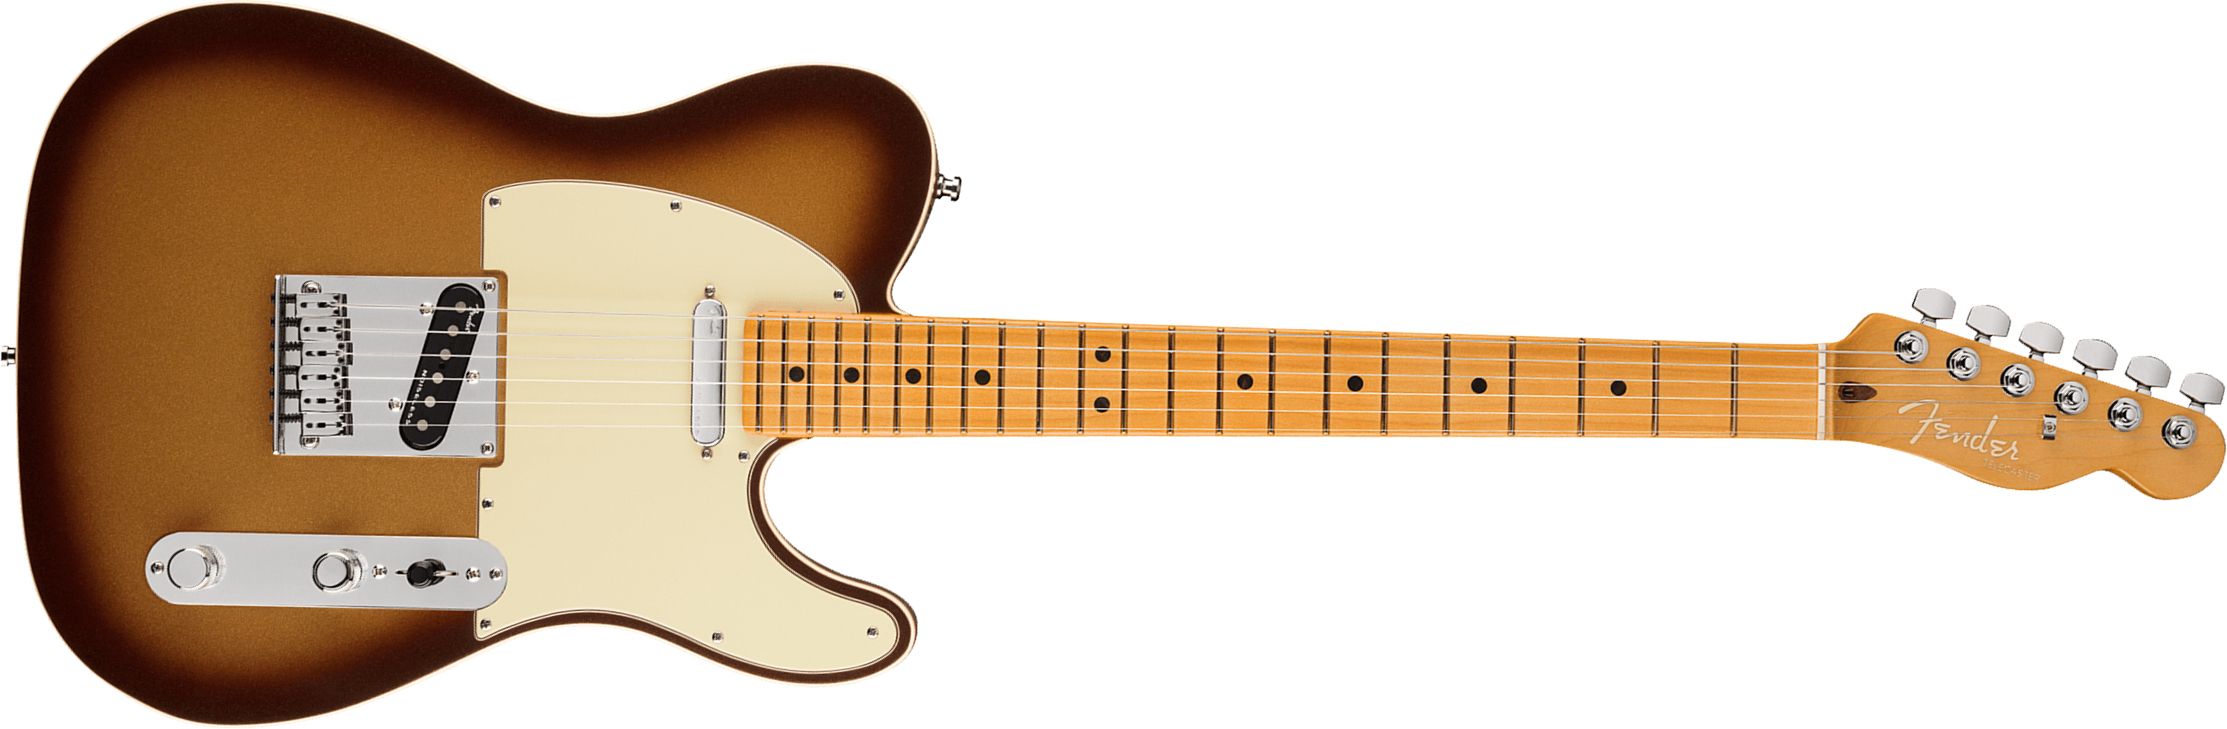 Fender Tele American Ultra 2019 Usa Mn - Mocha Burst - Tel shape electric guitar - Main picture